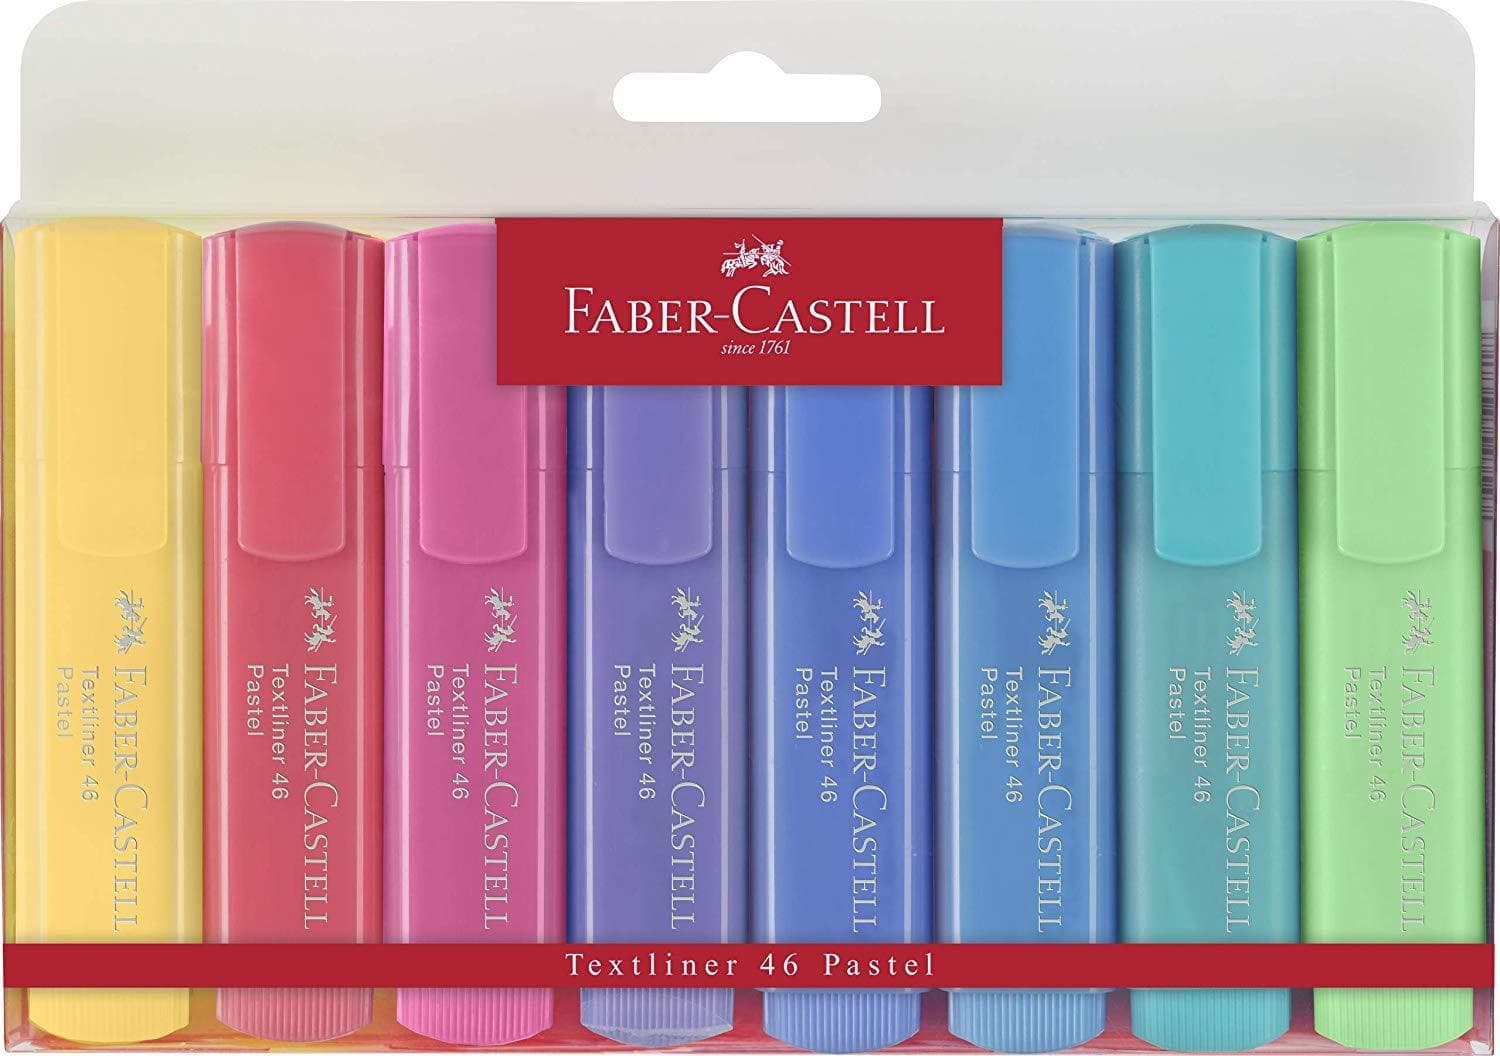 Faber-Castell Felt-tip pens - Set of 12